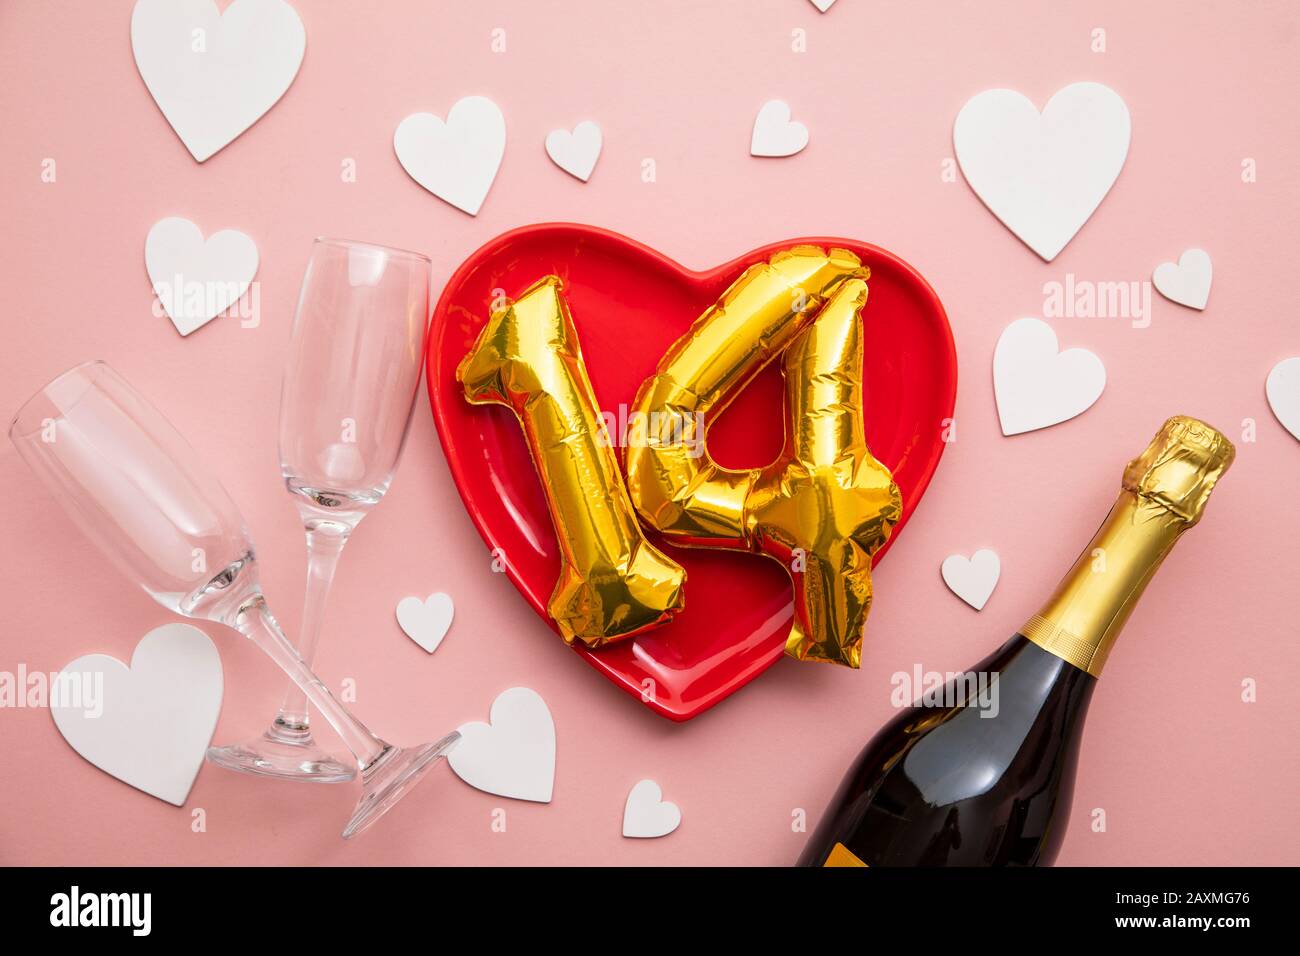 February 14th romantic valentine's day background Stock Photo